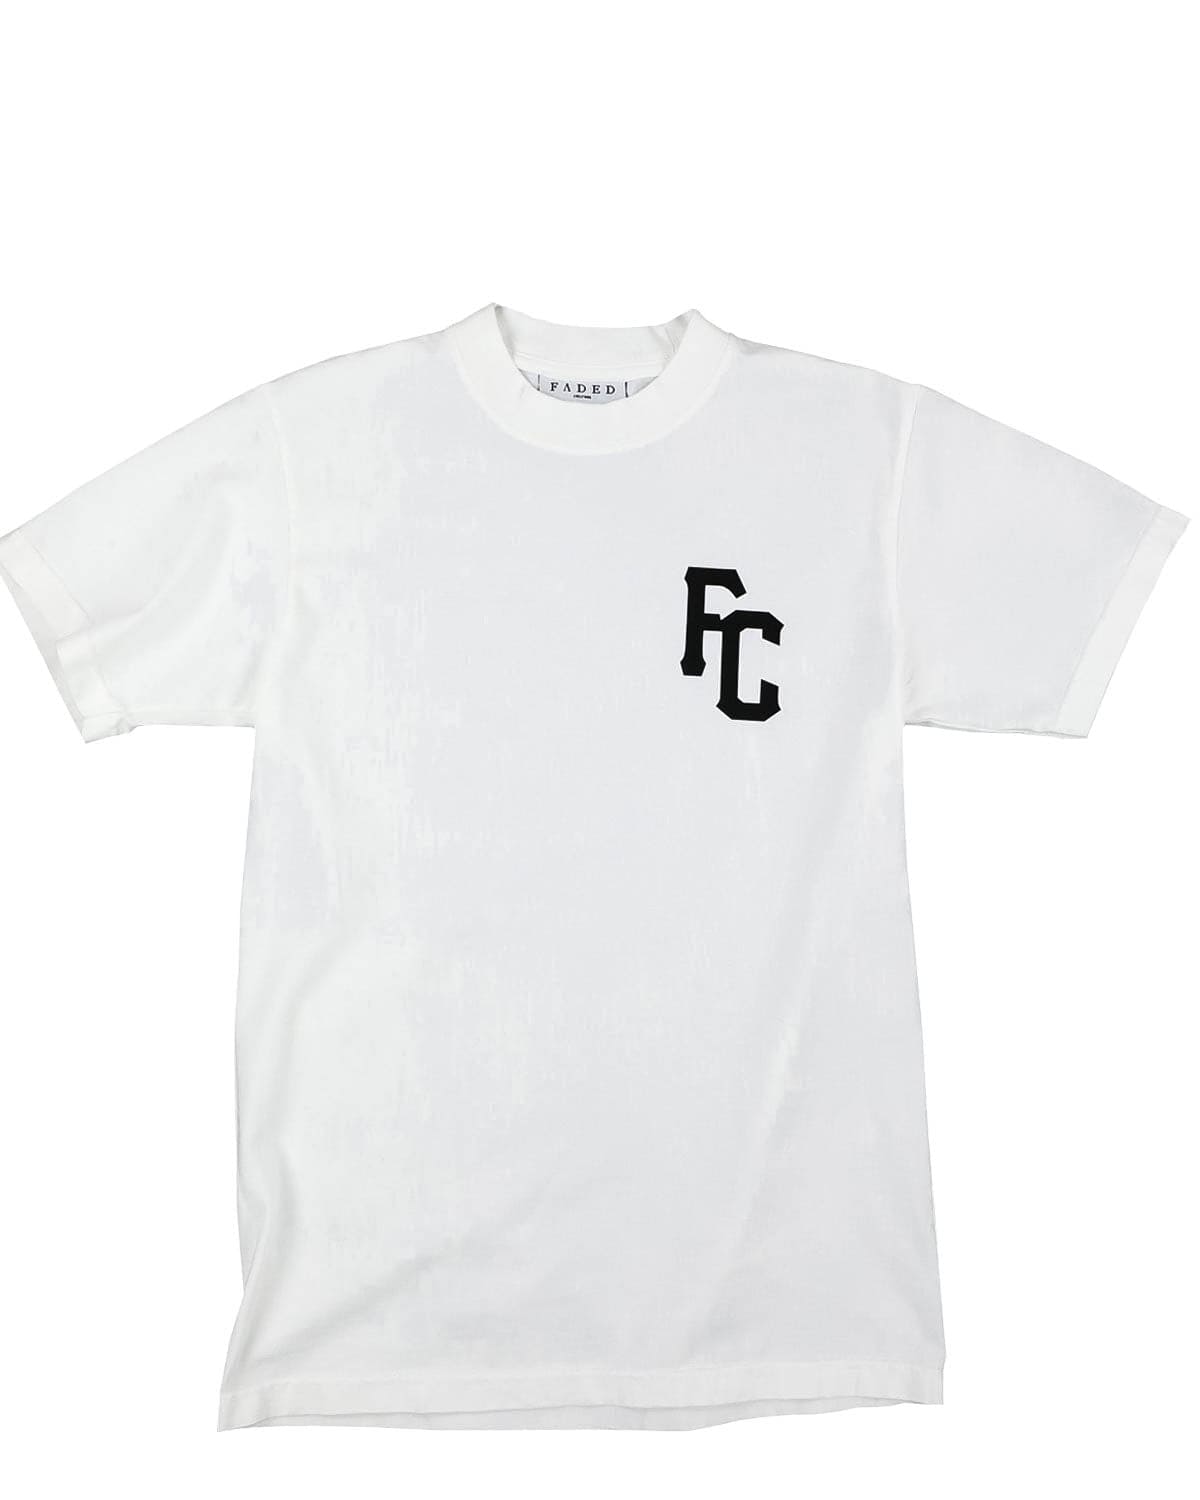 7.5 oz. Max heavyweight garment dye, FC Sport White oversized shirt with black print #color_white